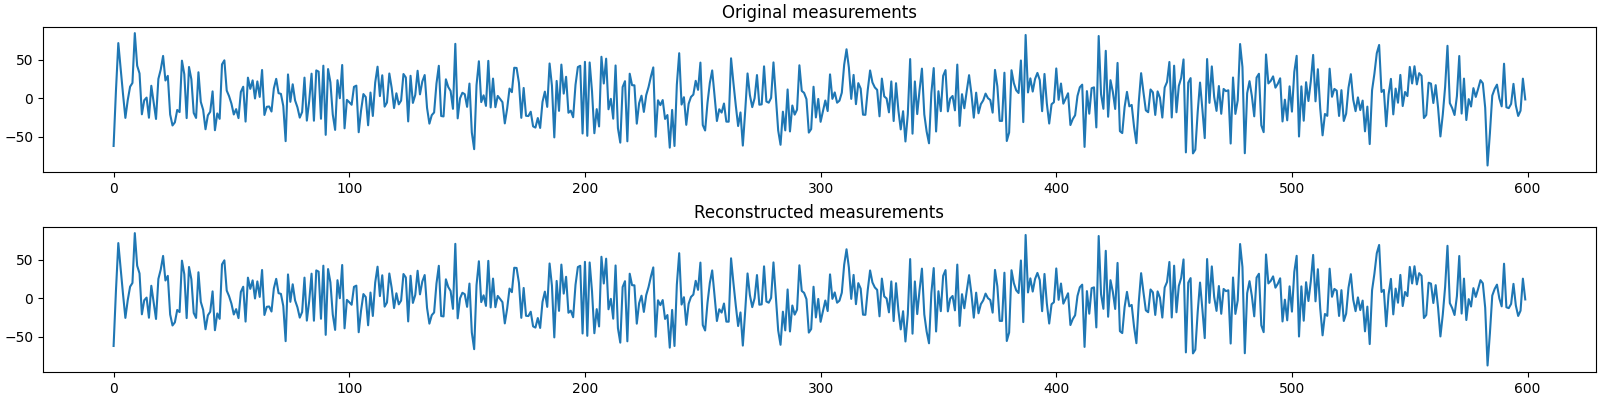 Original measurements, Reconstructed measurements